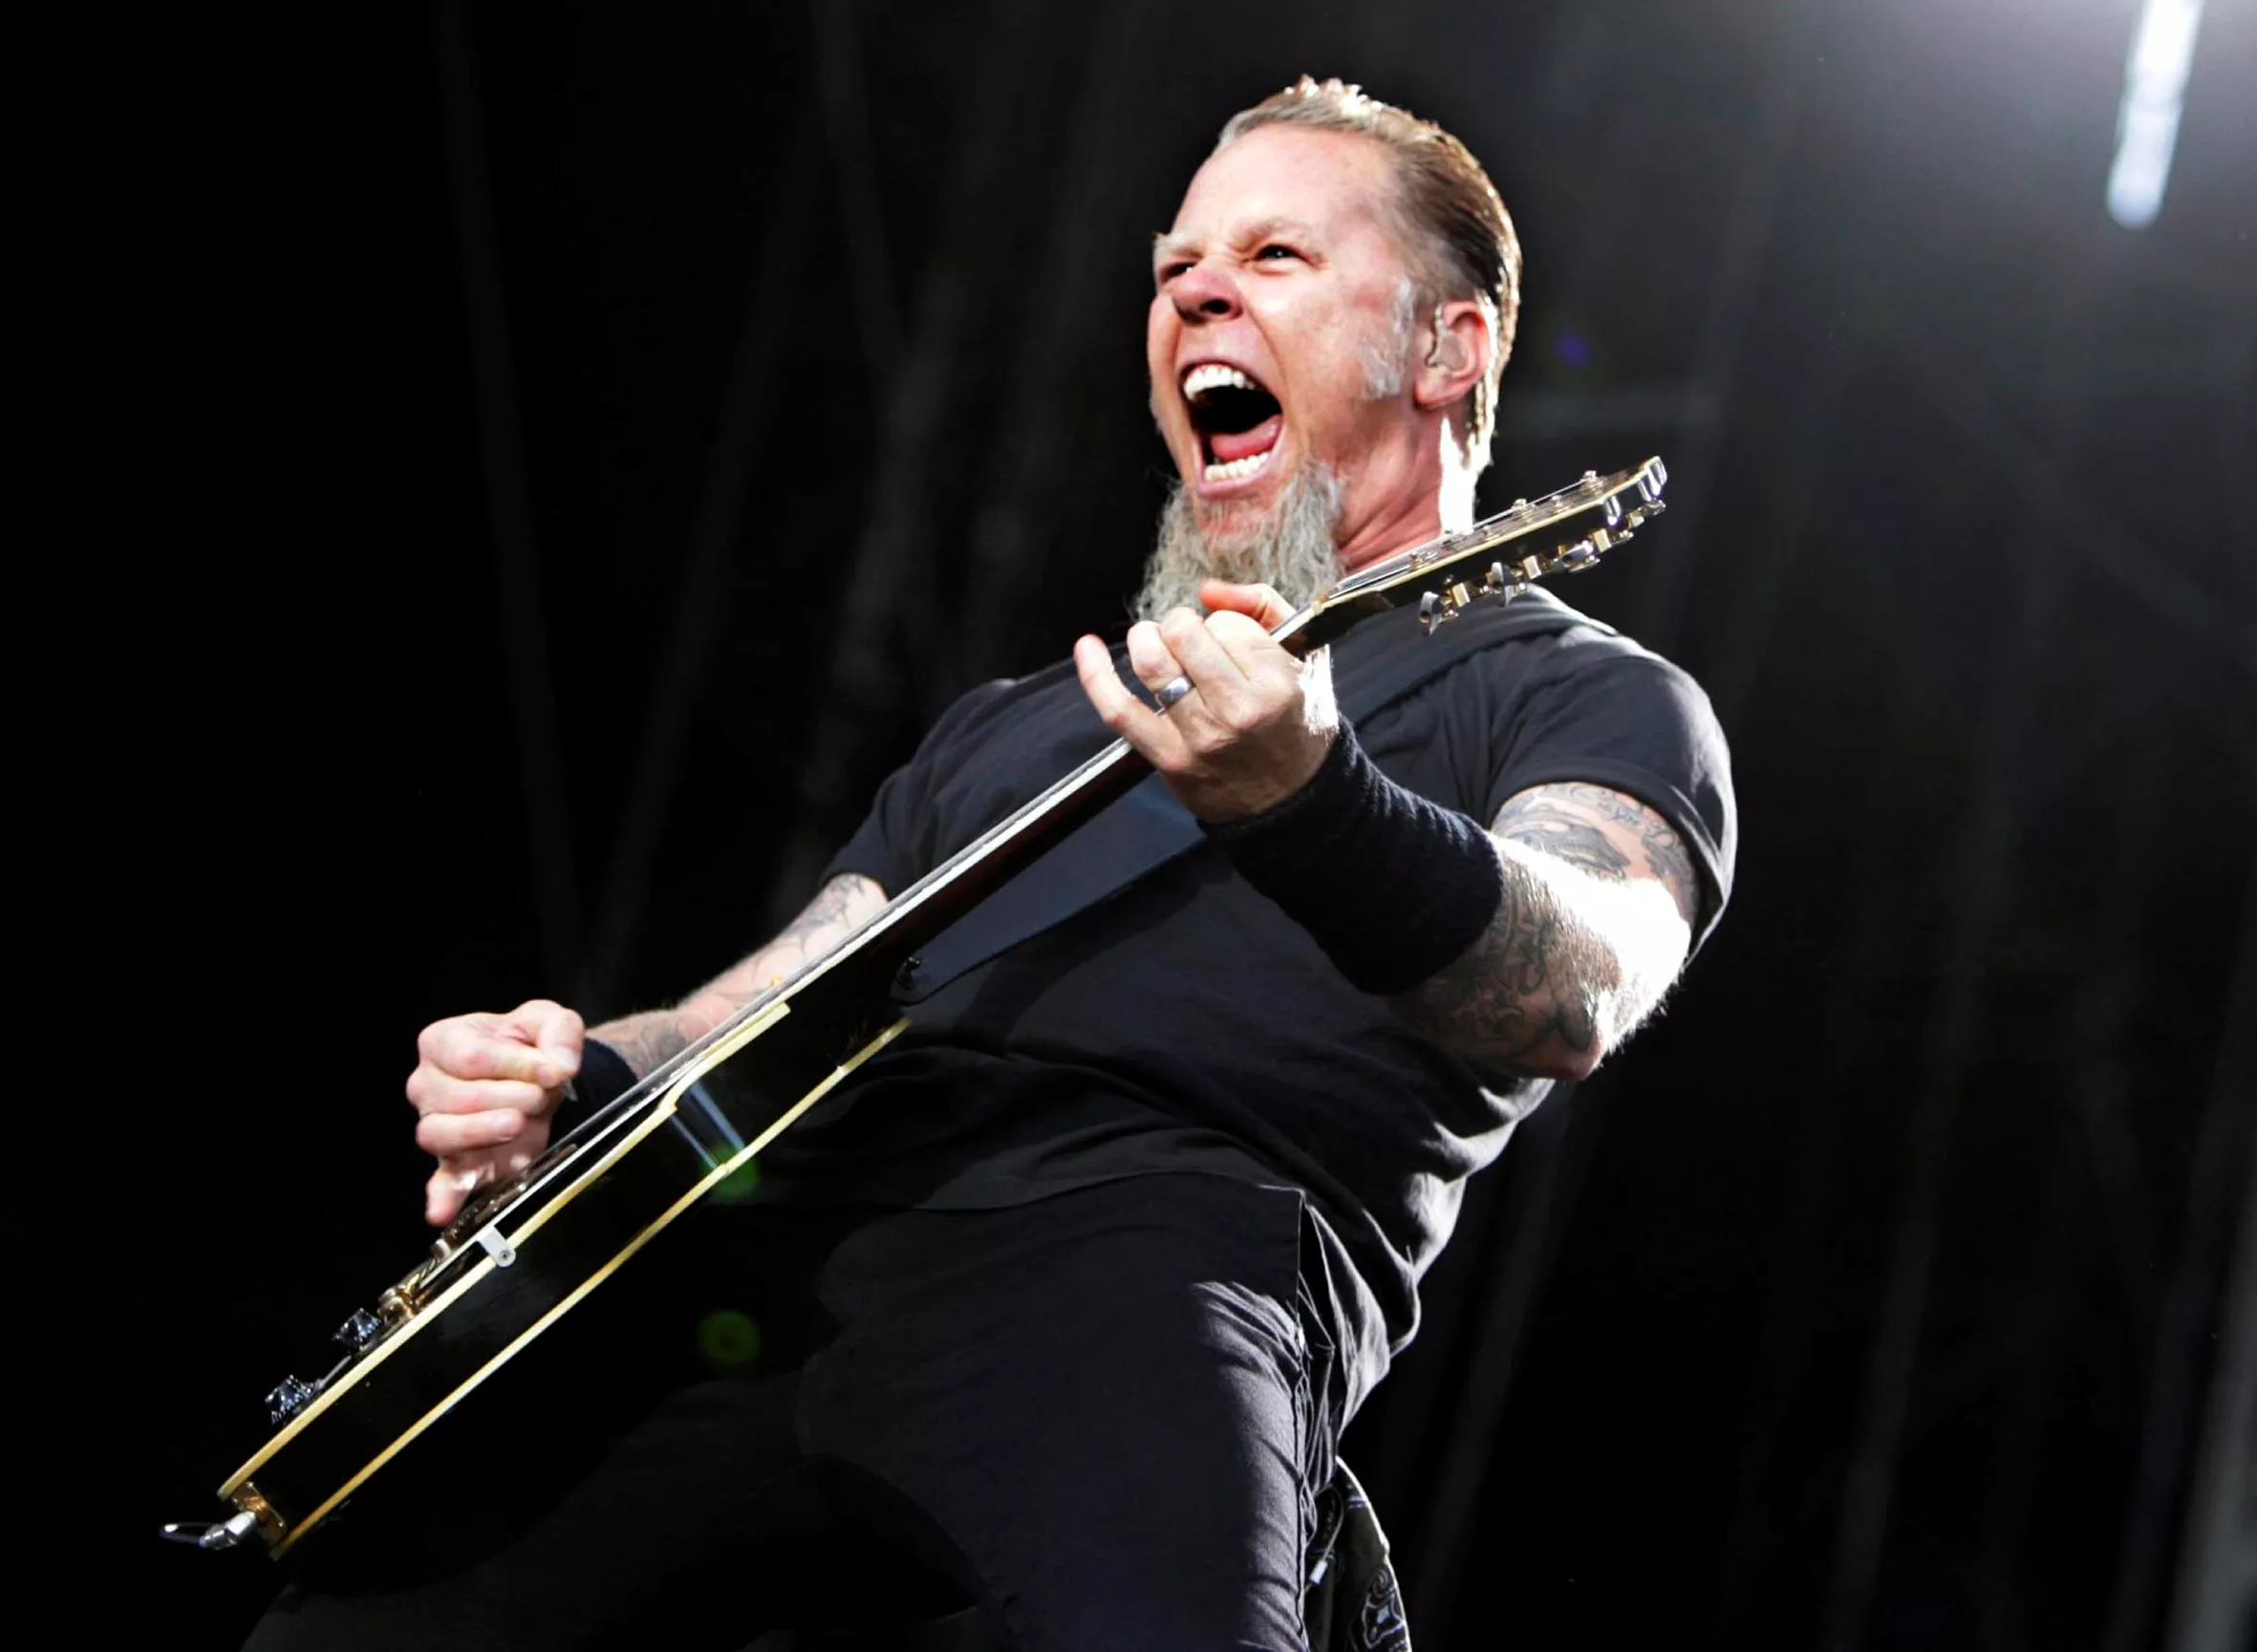 Madforgiftning bag Metallica-aflysning